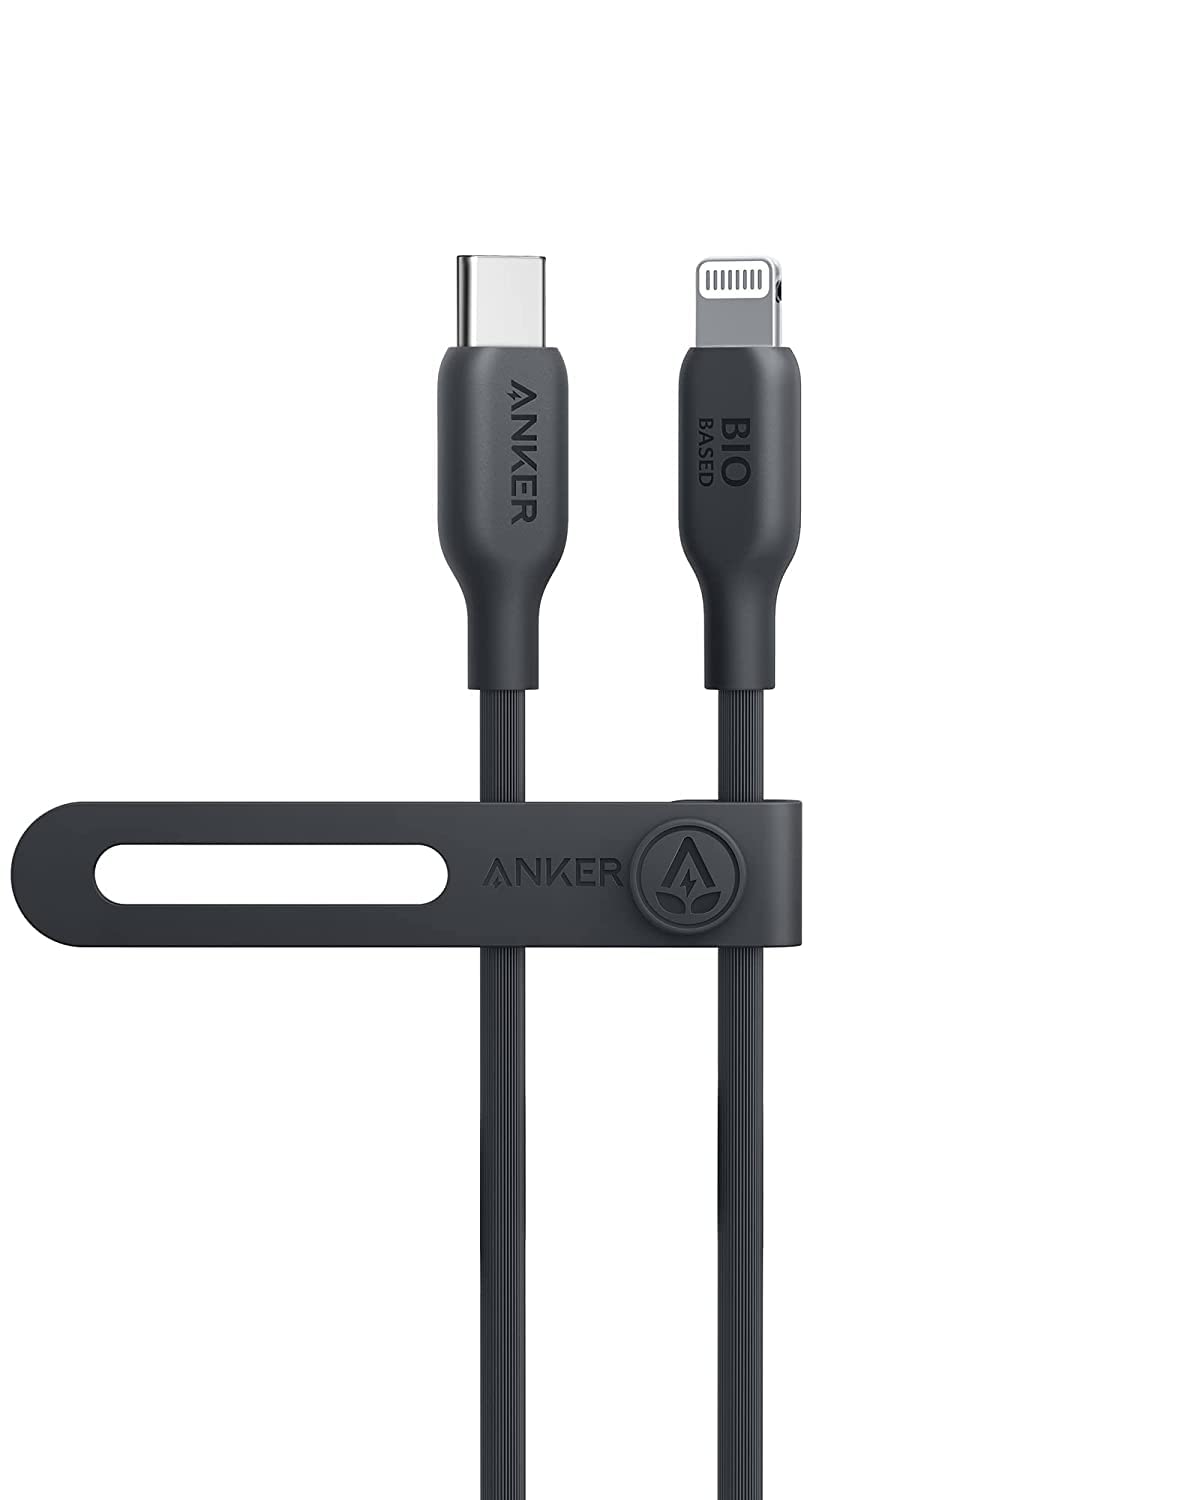 Anker 542 USB-C to Lightning Cable (Bio-Based 6ft) - Black